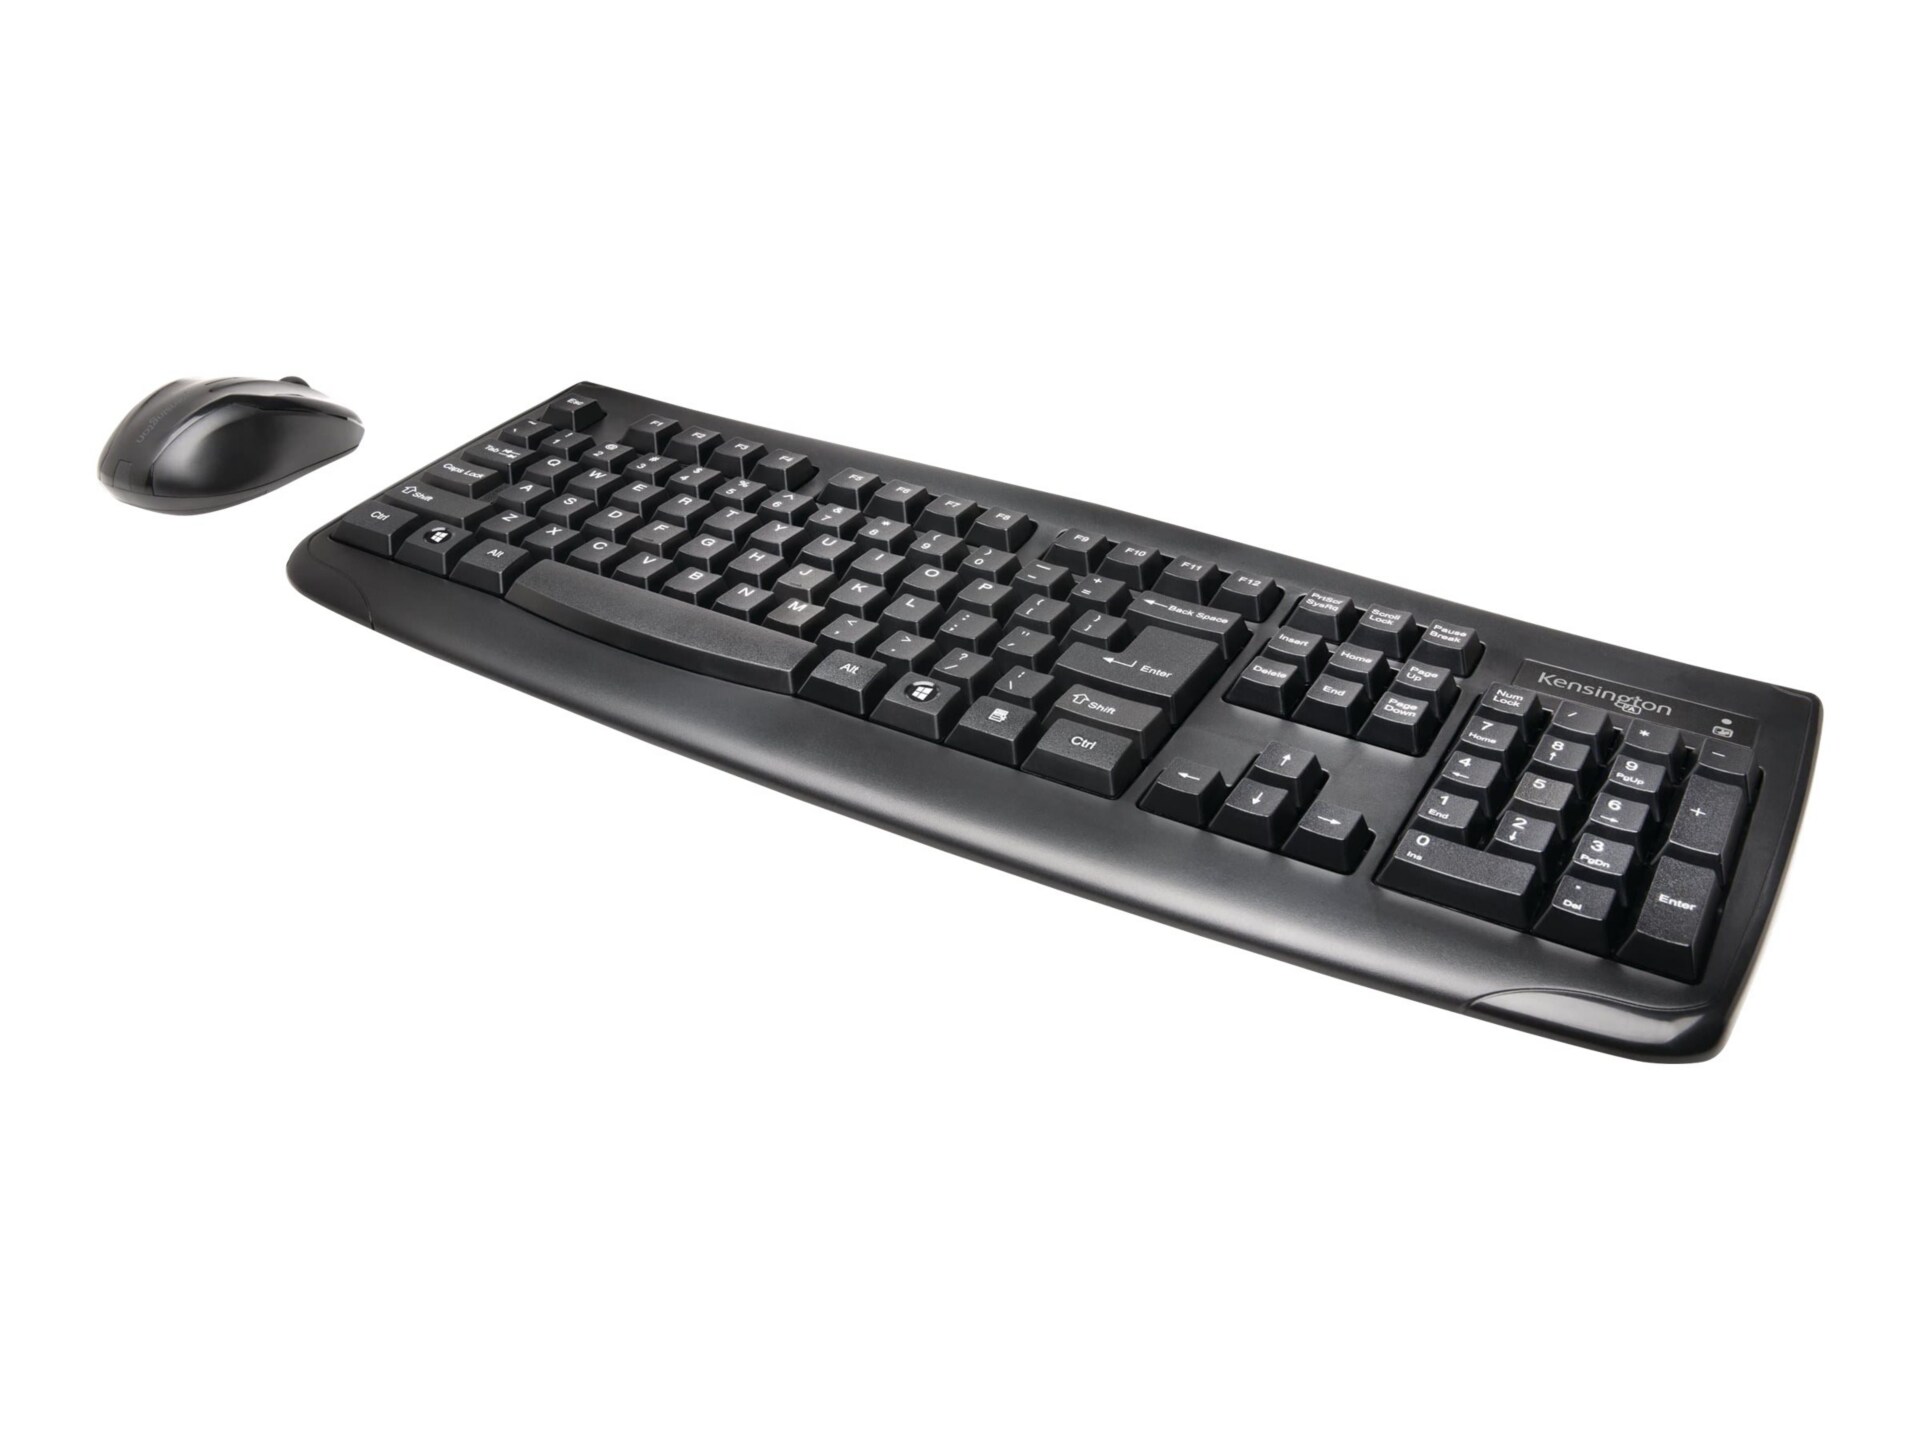 Kensington Pro Fit - keyboard and mouse set - US - black